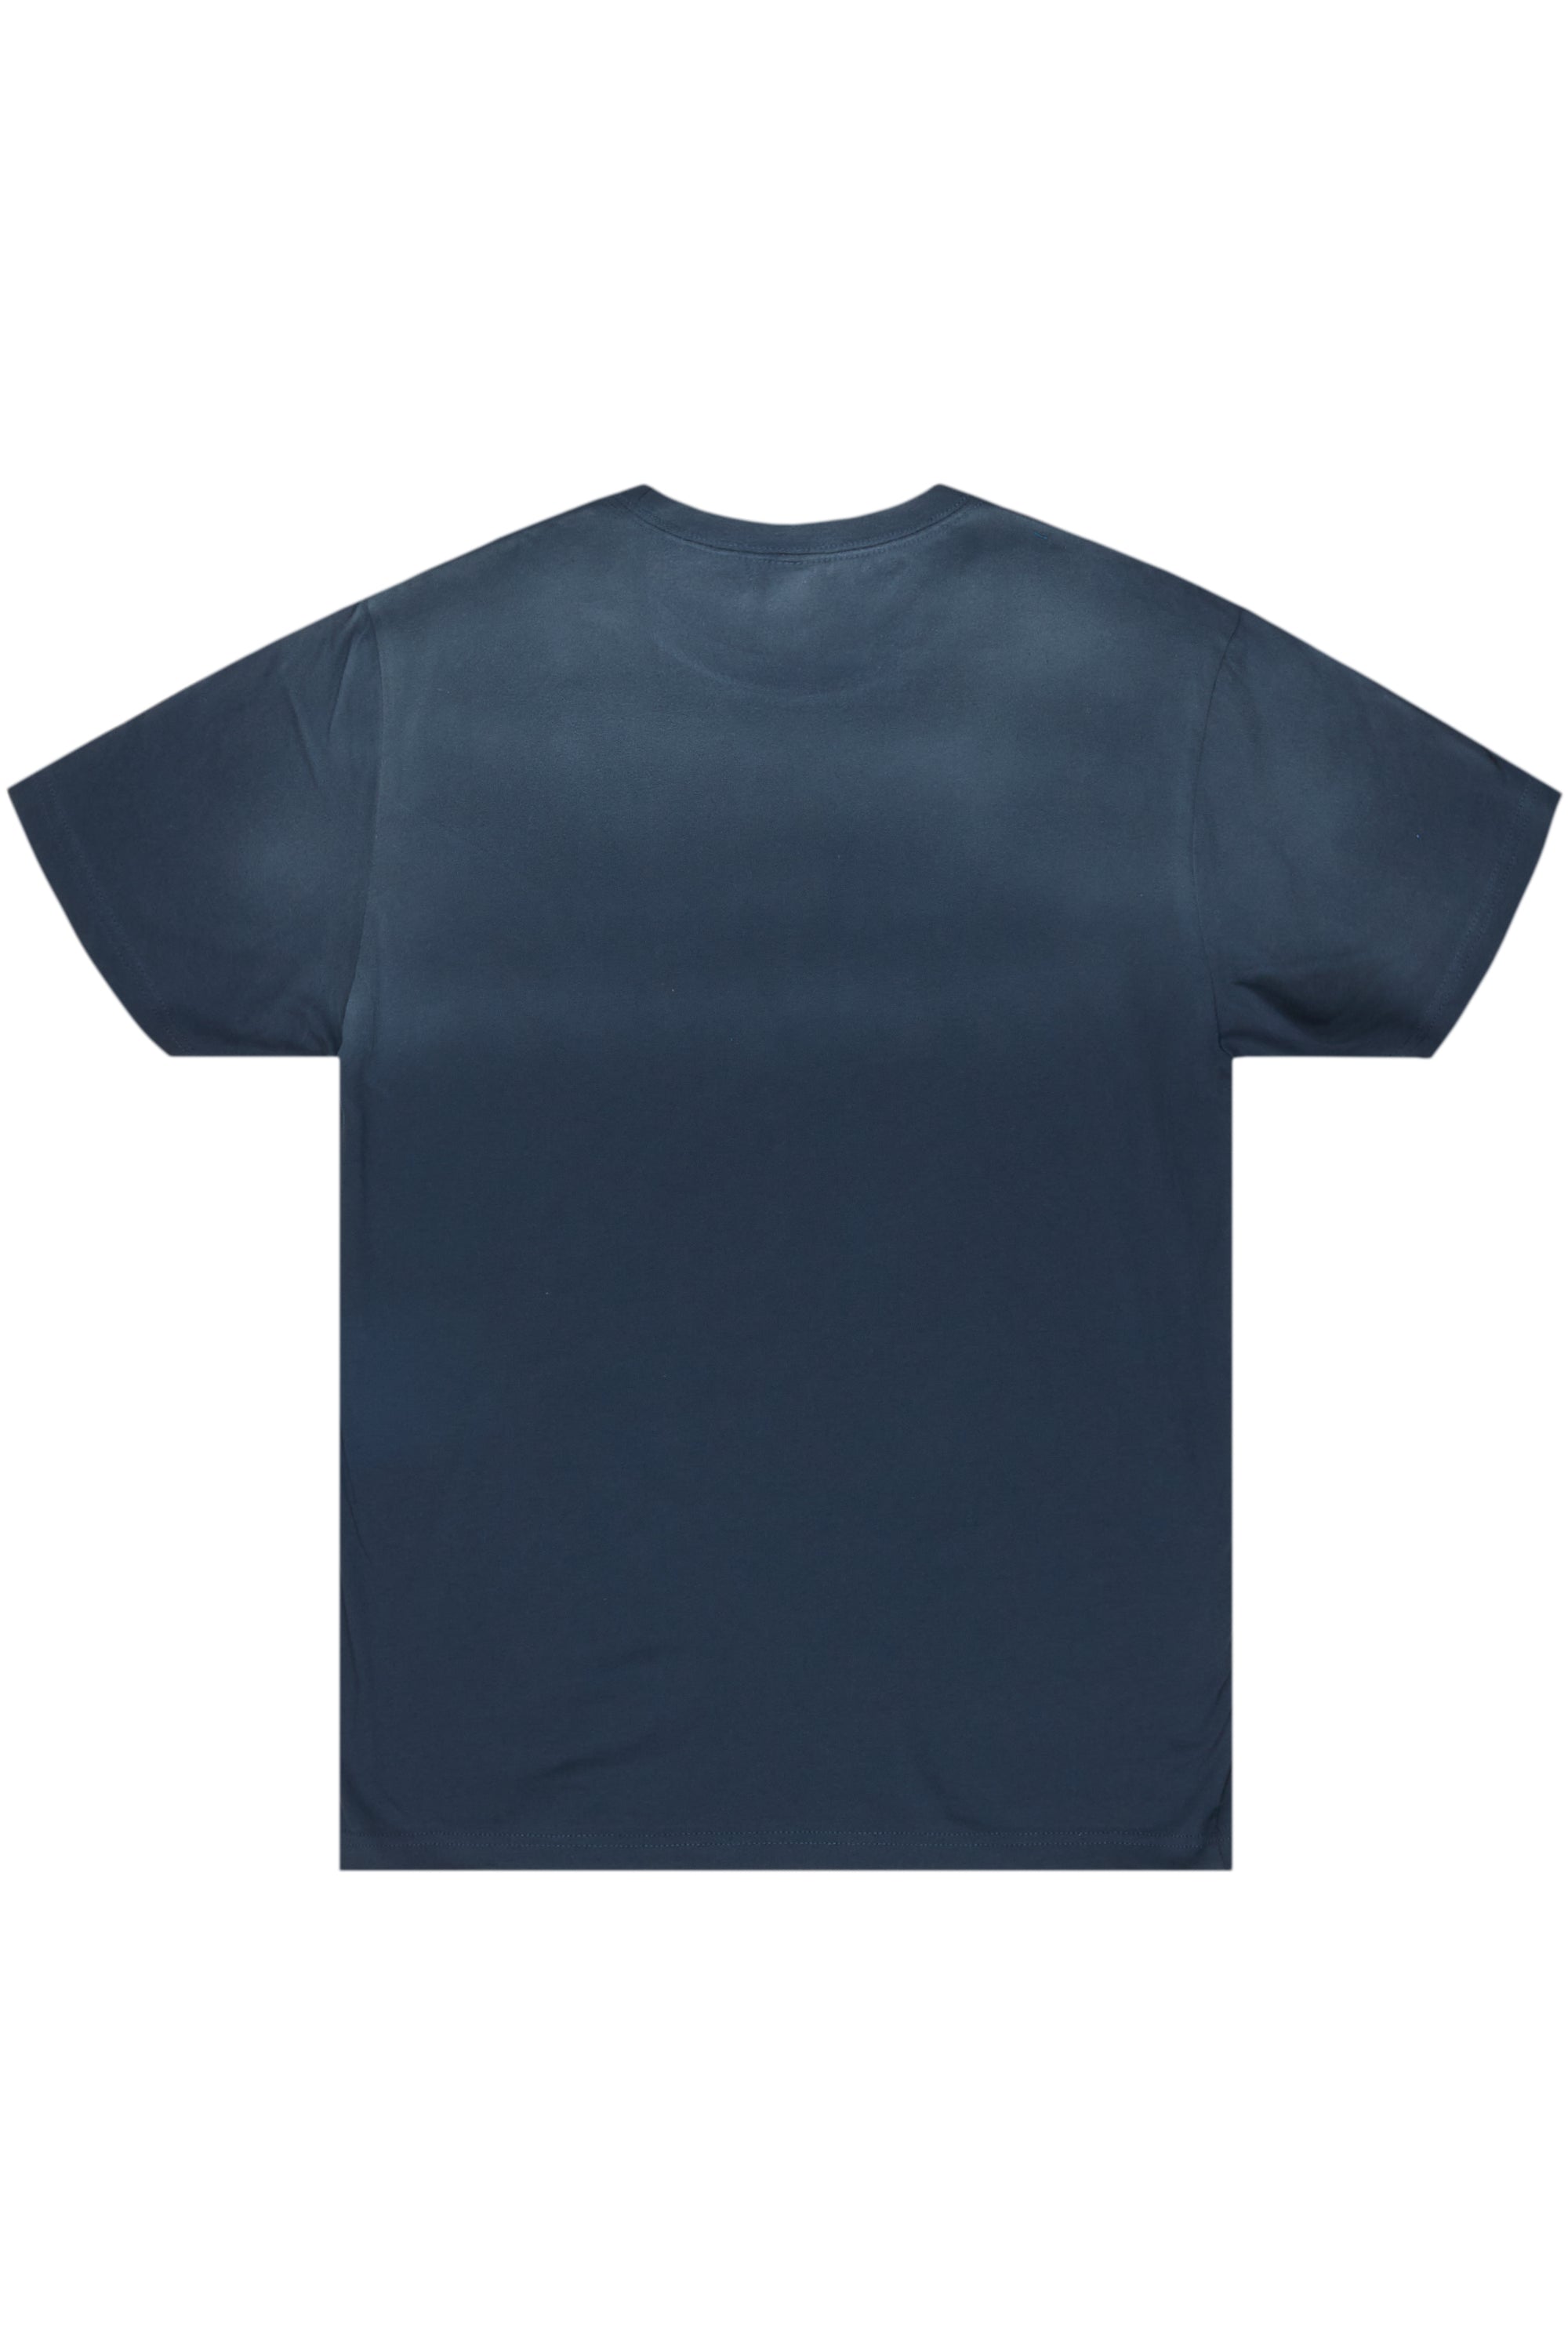 Palmer Indigo Graphic T-Shirt